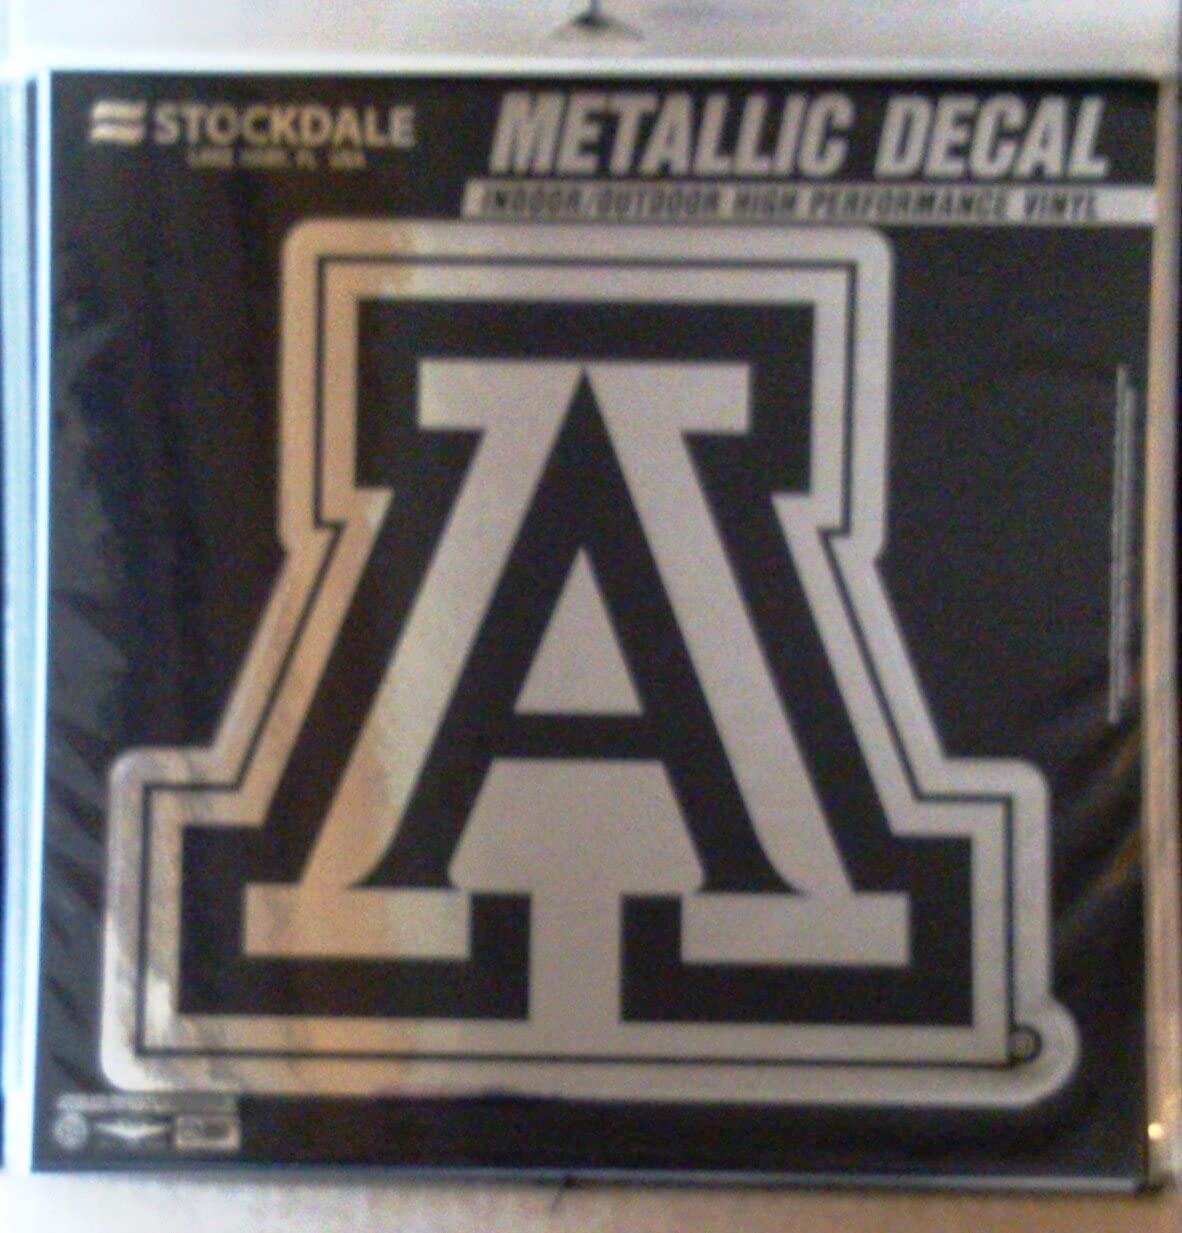 University of Arizona Wildcats 12 Inch Decal Sticker, Metallic Chrome Shimmer Design